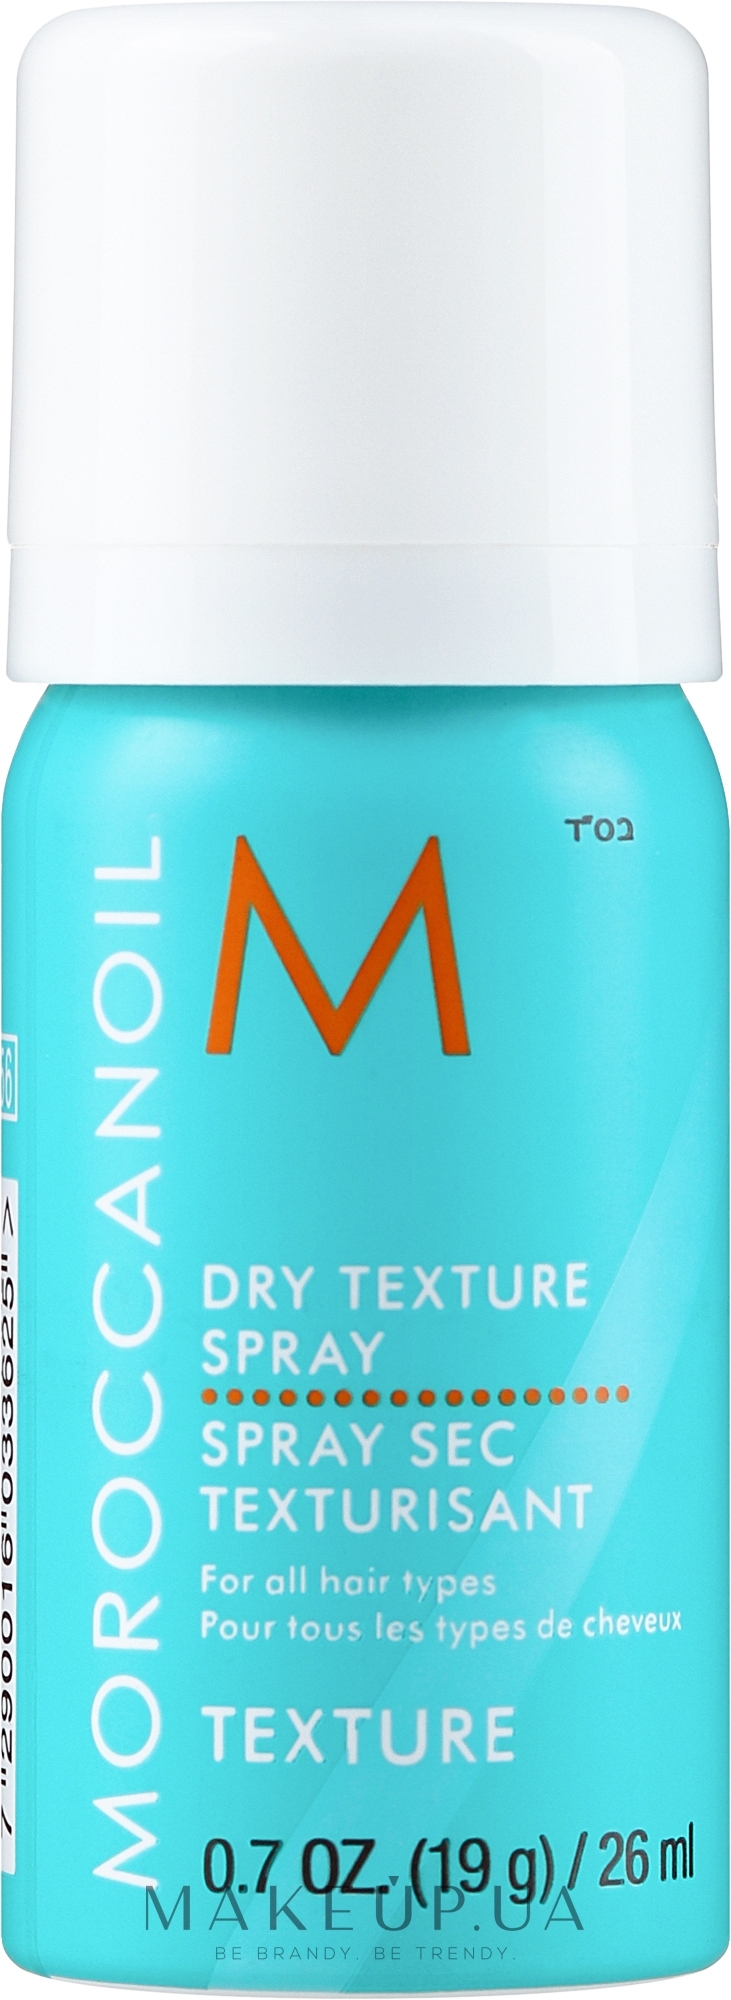 Сухой текстурный спрей для волос - Moroccanoil Dry Texture Spray — фото 26ml